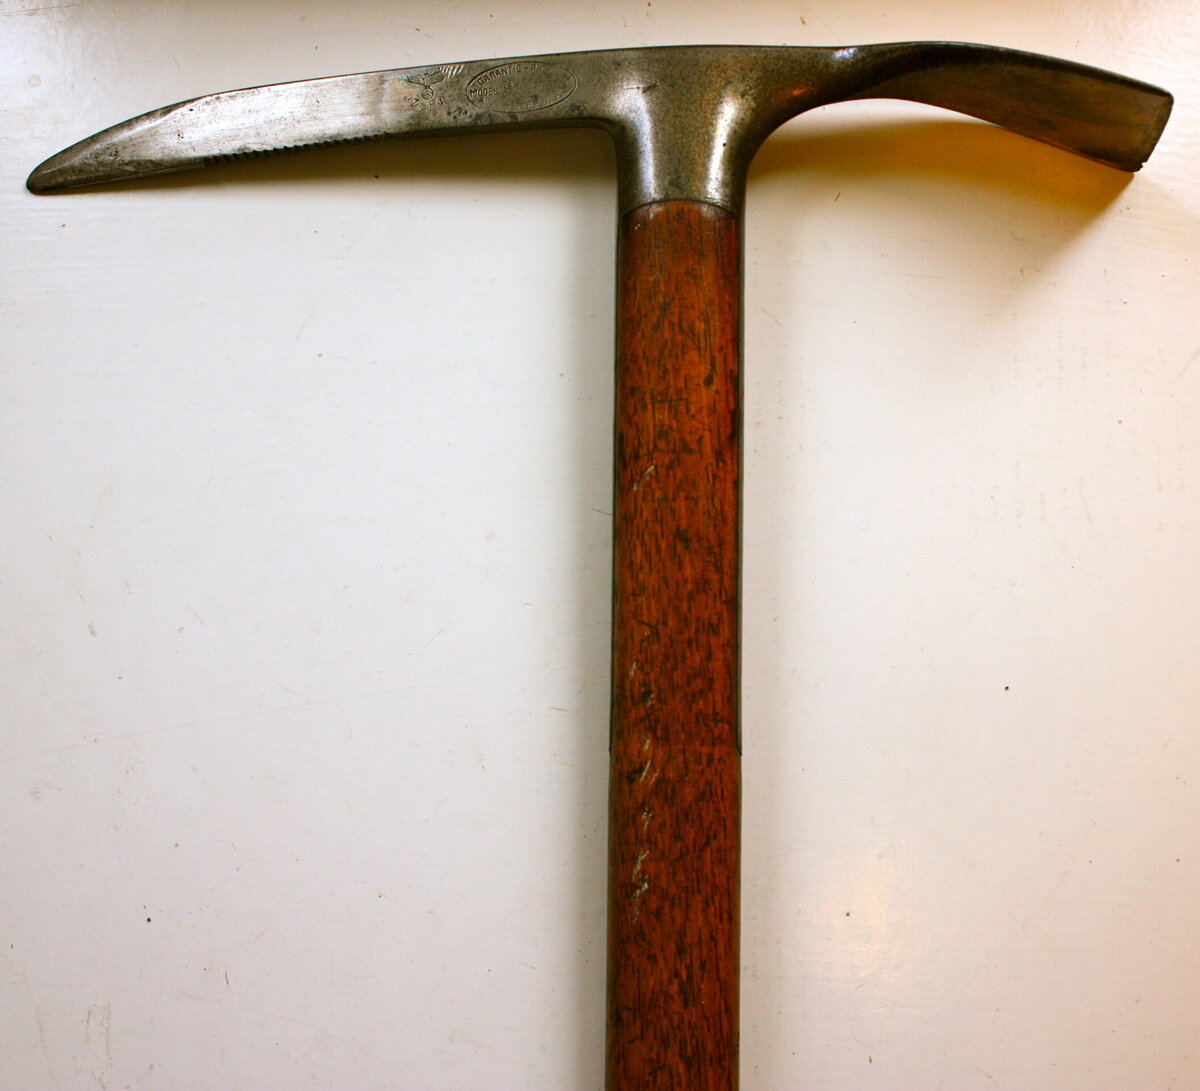 Josef  Becker's Ice axe